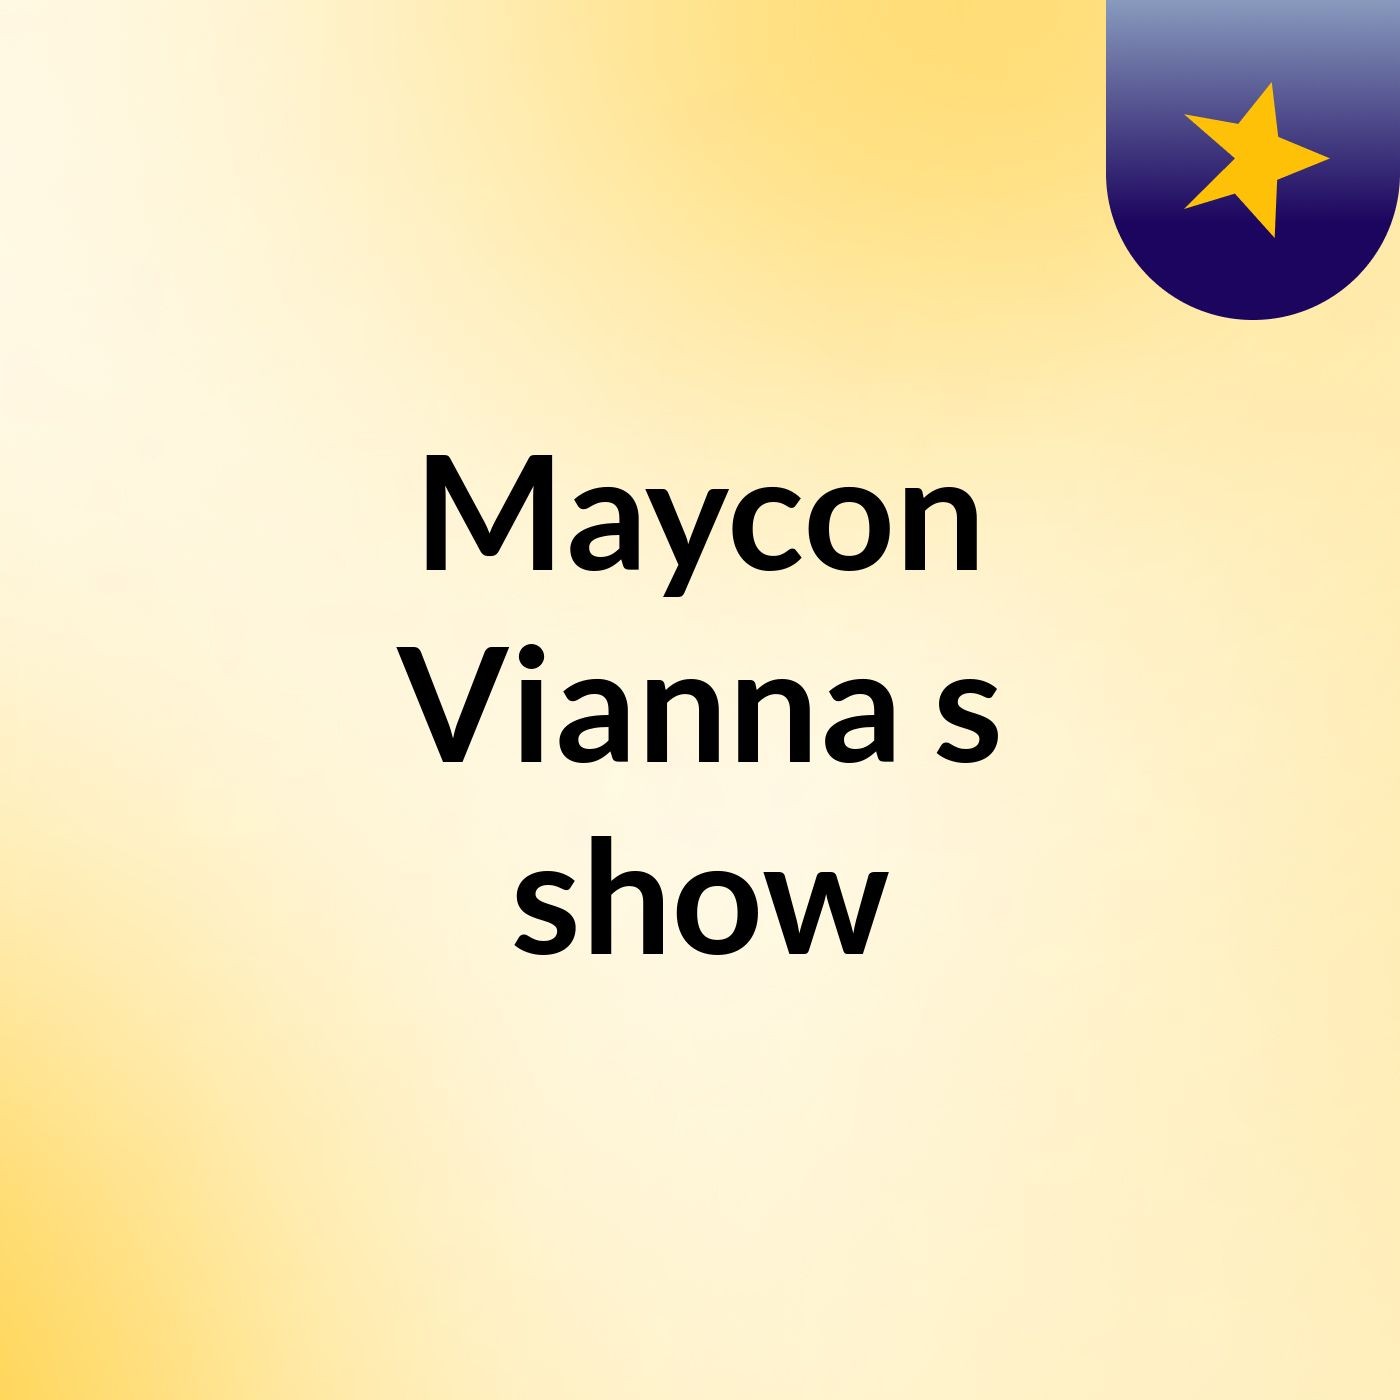 Maycon Vianna's show